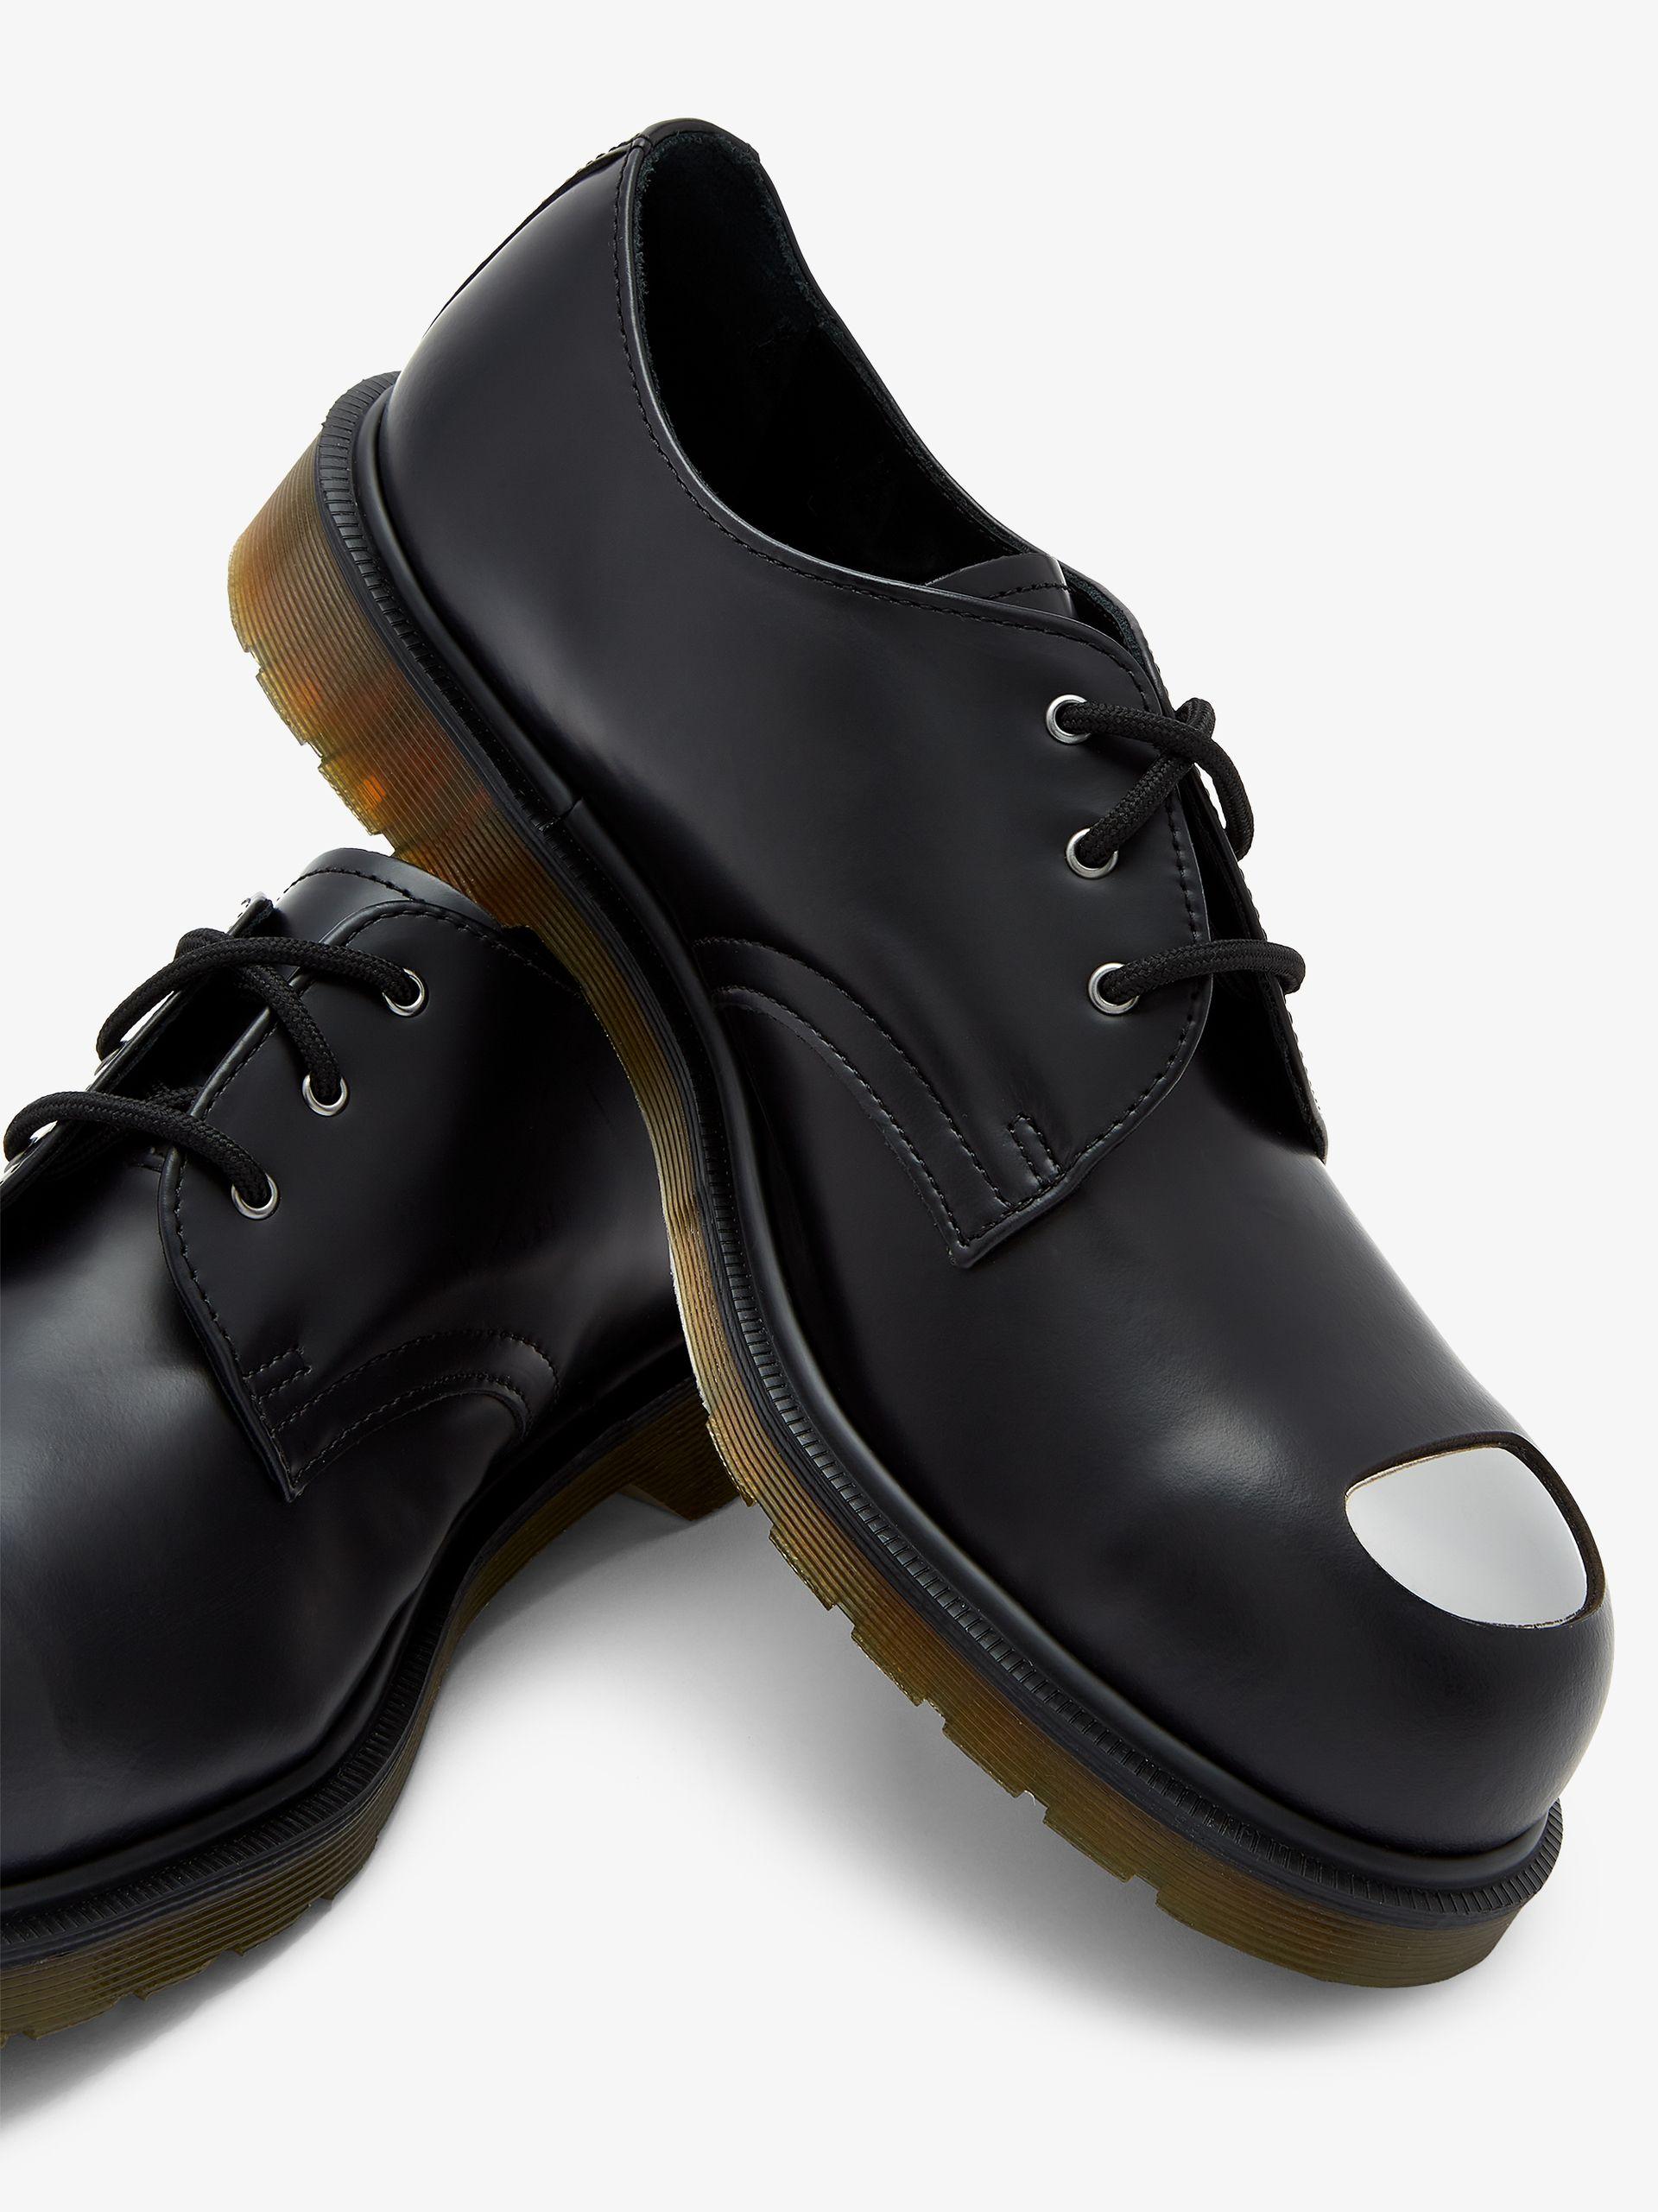 Dr. Martens Black 1925 Exposed Steel Toe Derby Shoes for Men | Lyst